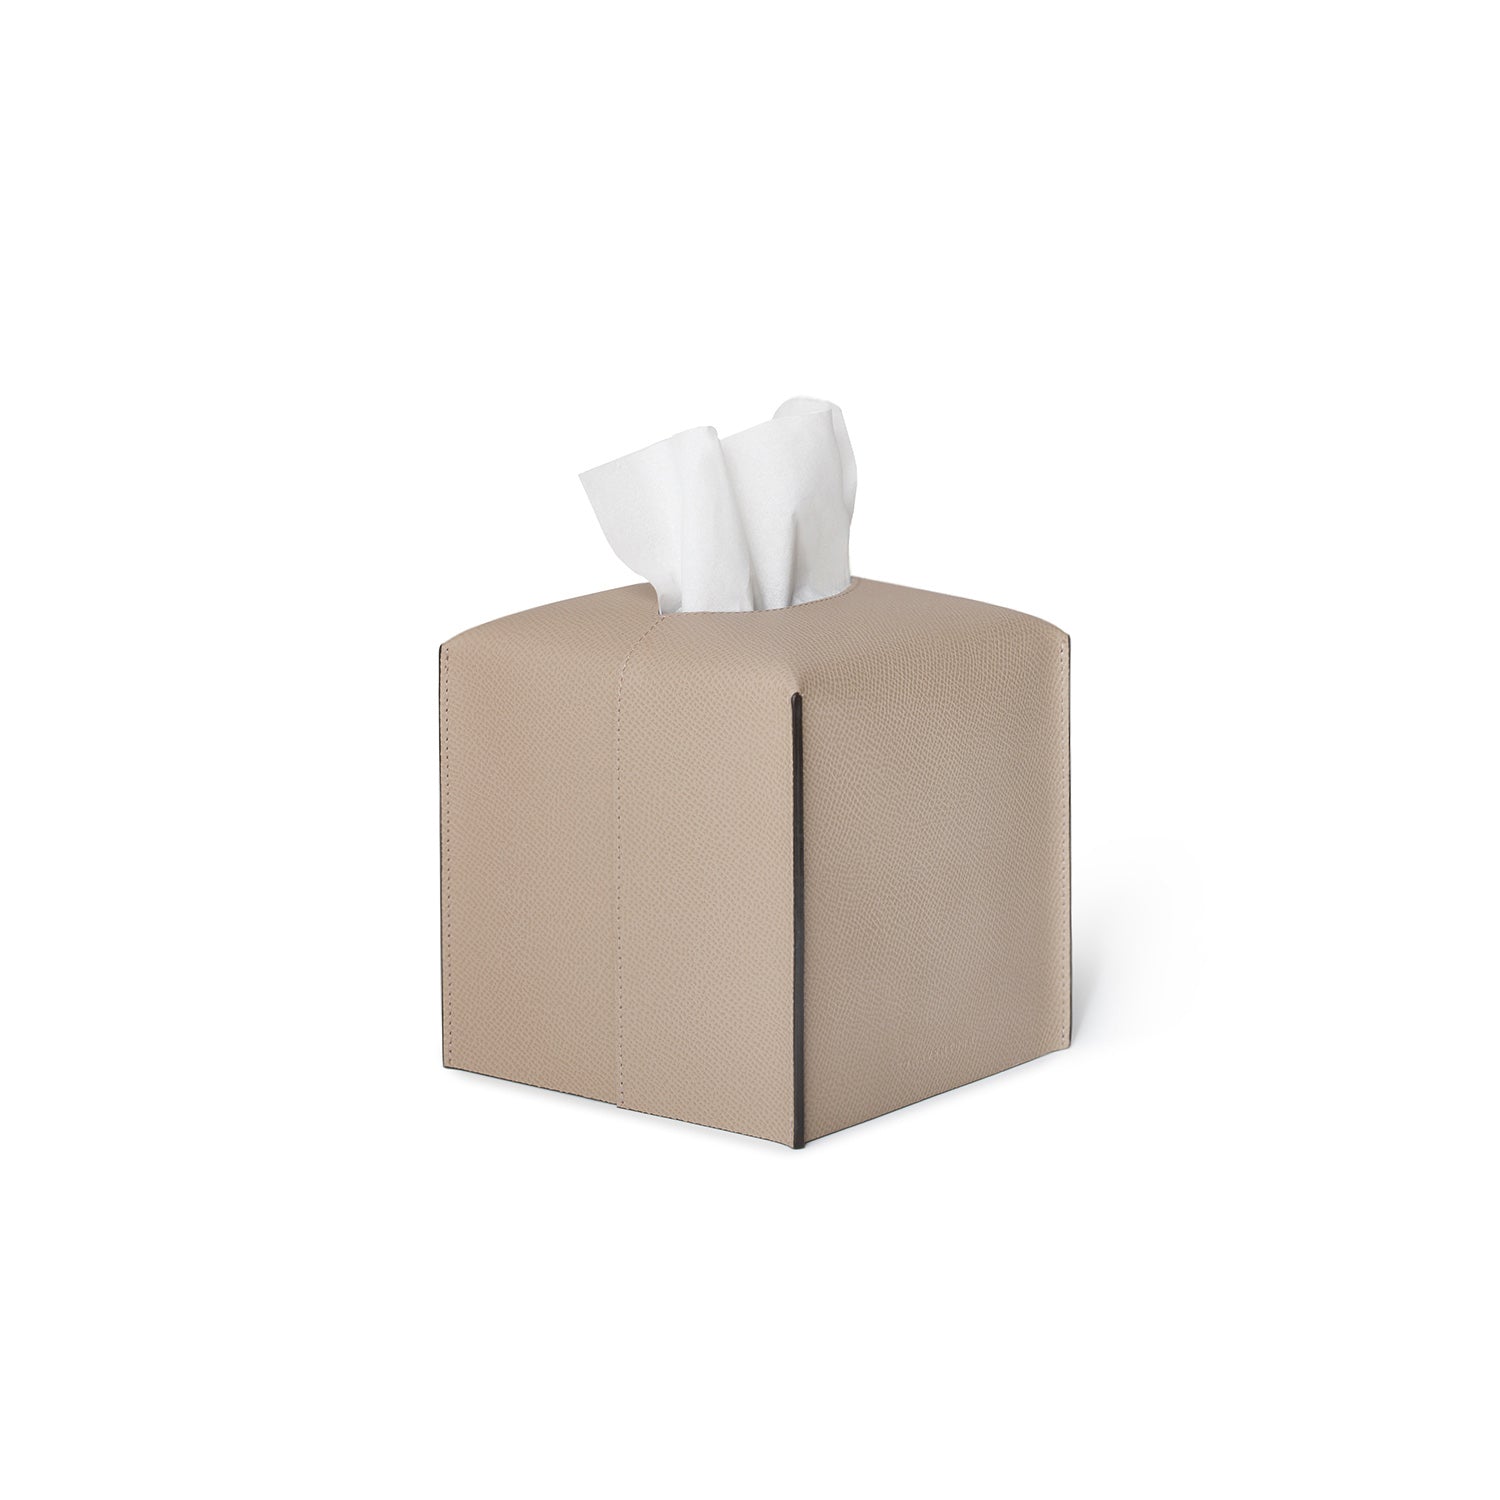 Tissue box cover (square Noblesse)